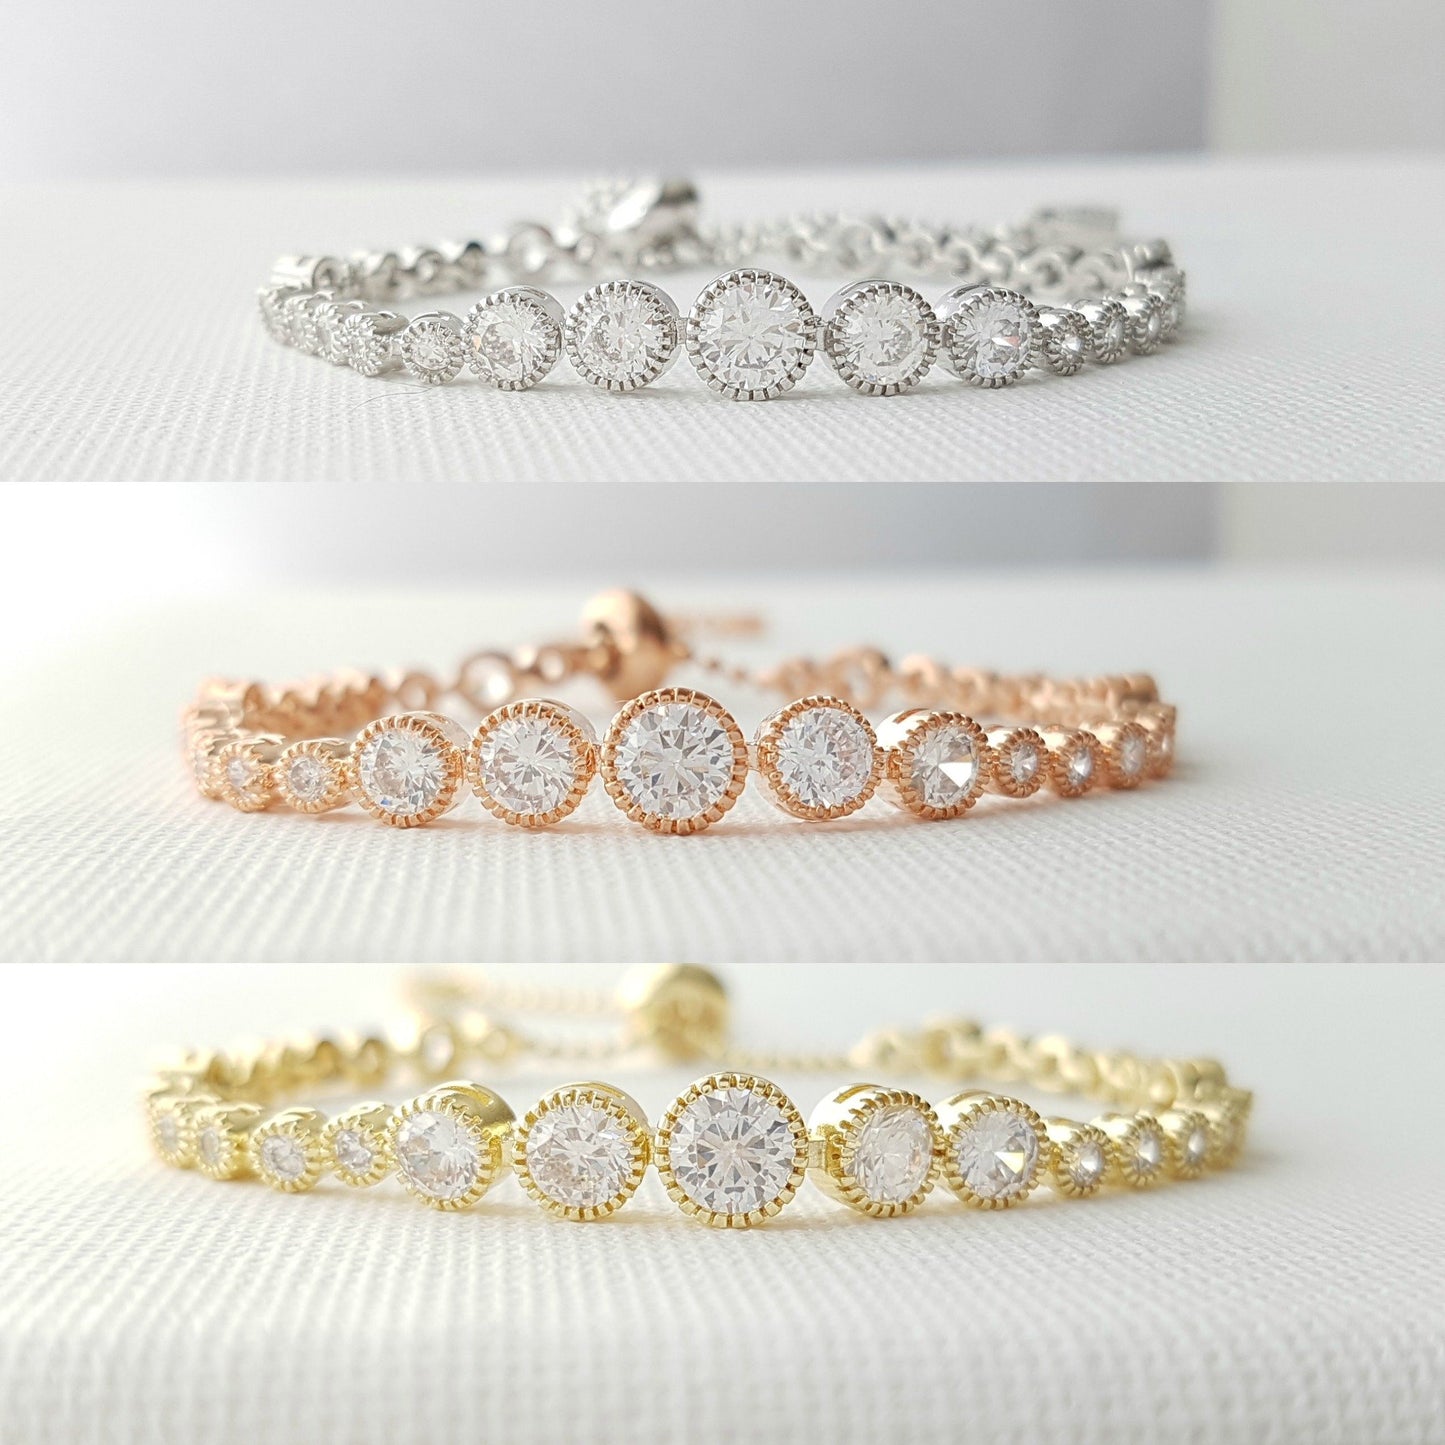 Bracelet de mariée rond en cristal - Zara